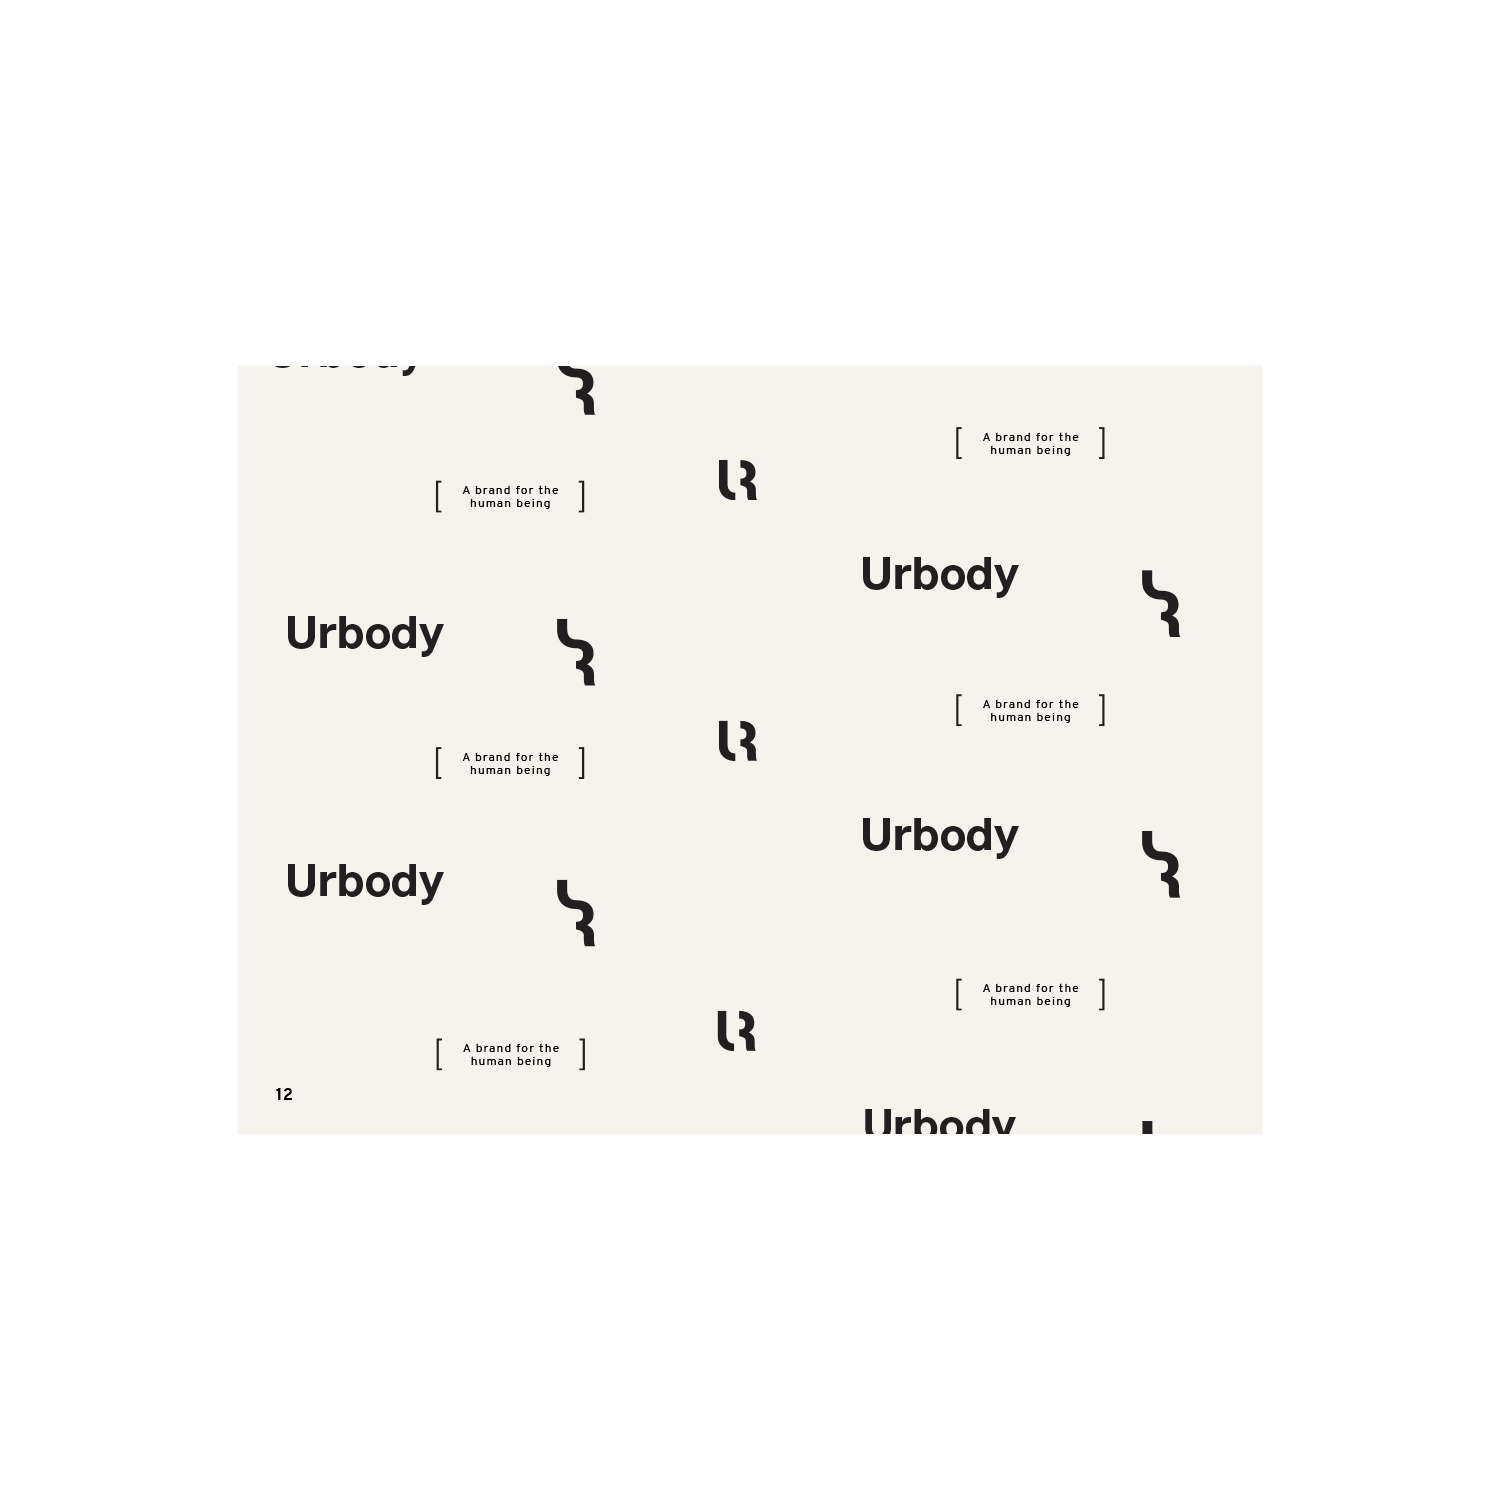 04-10-21-UrbodyBrandBook-Internal-Print-dragged-5